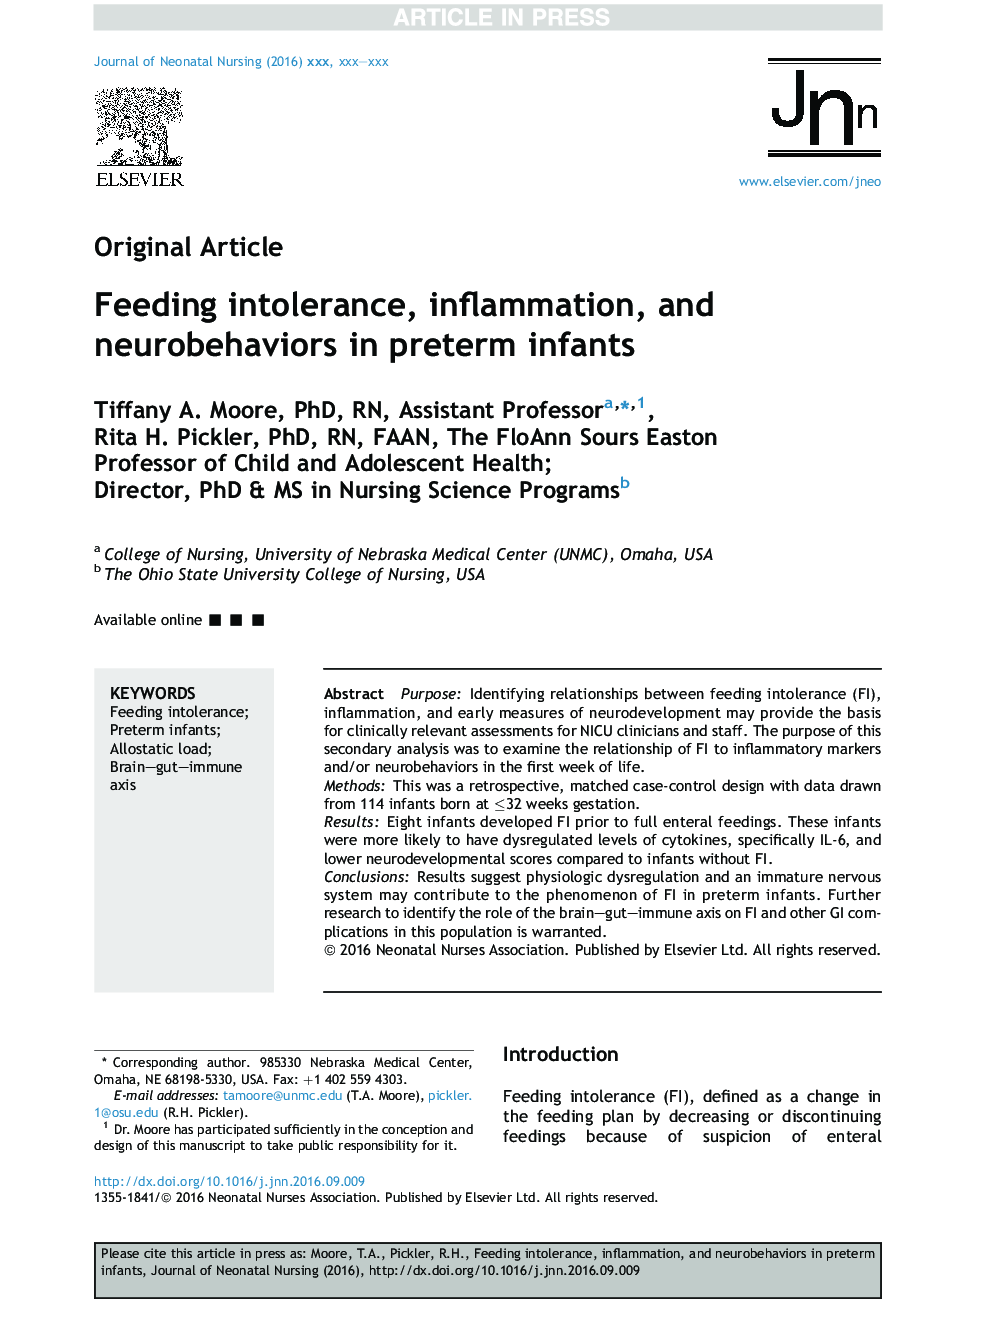 Feeding intolerance, inflammation, and neurobehaviors in preterm infants